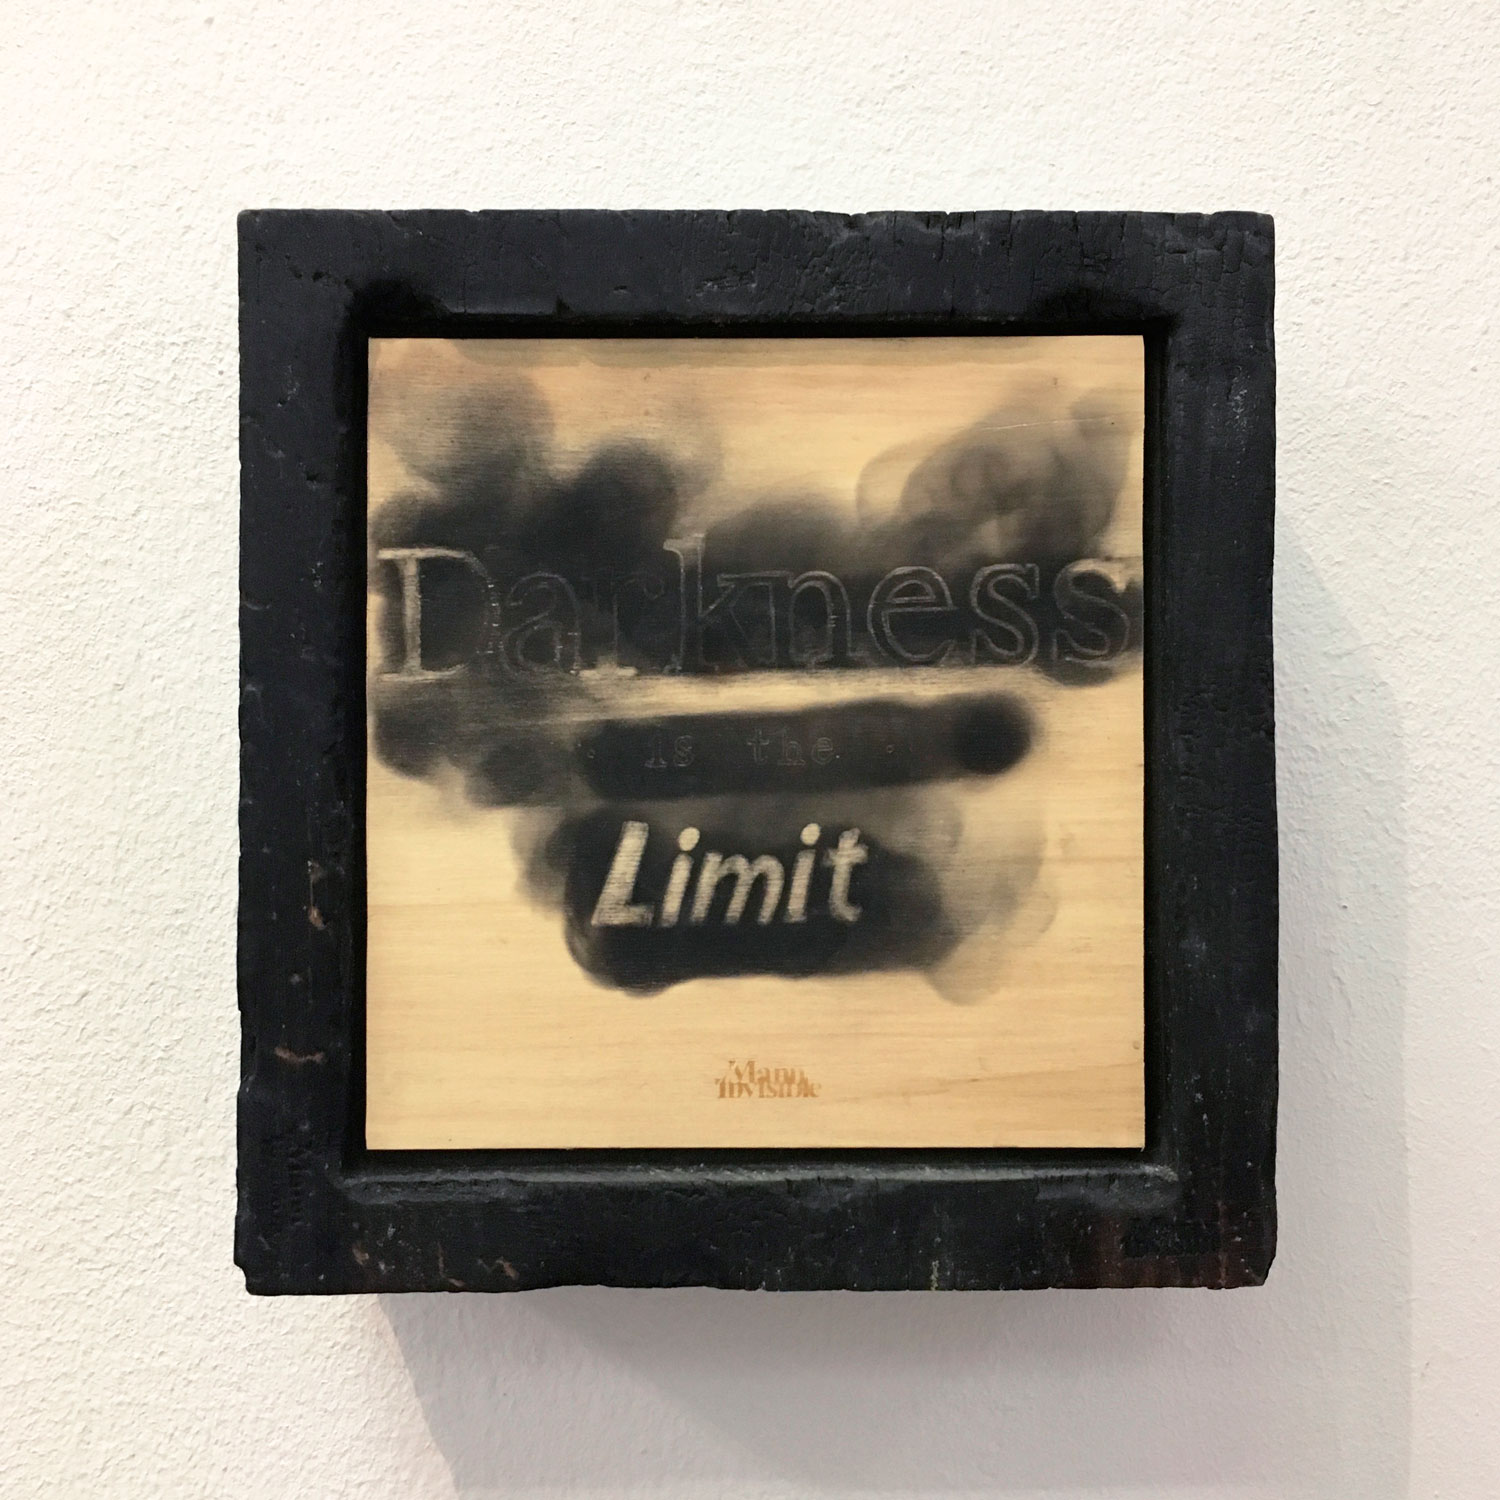 “Darkness is the Limit” Smoke on wood 30 x 28 x 10 cm 2017